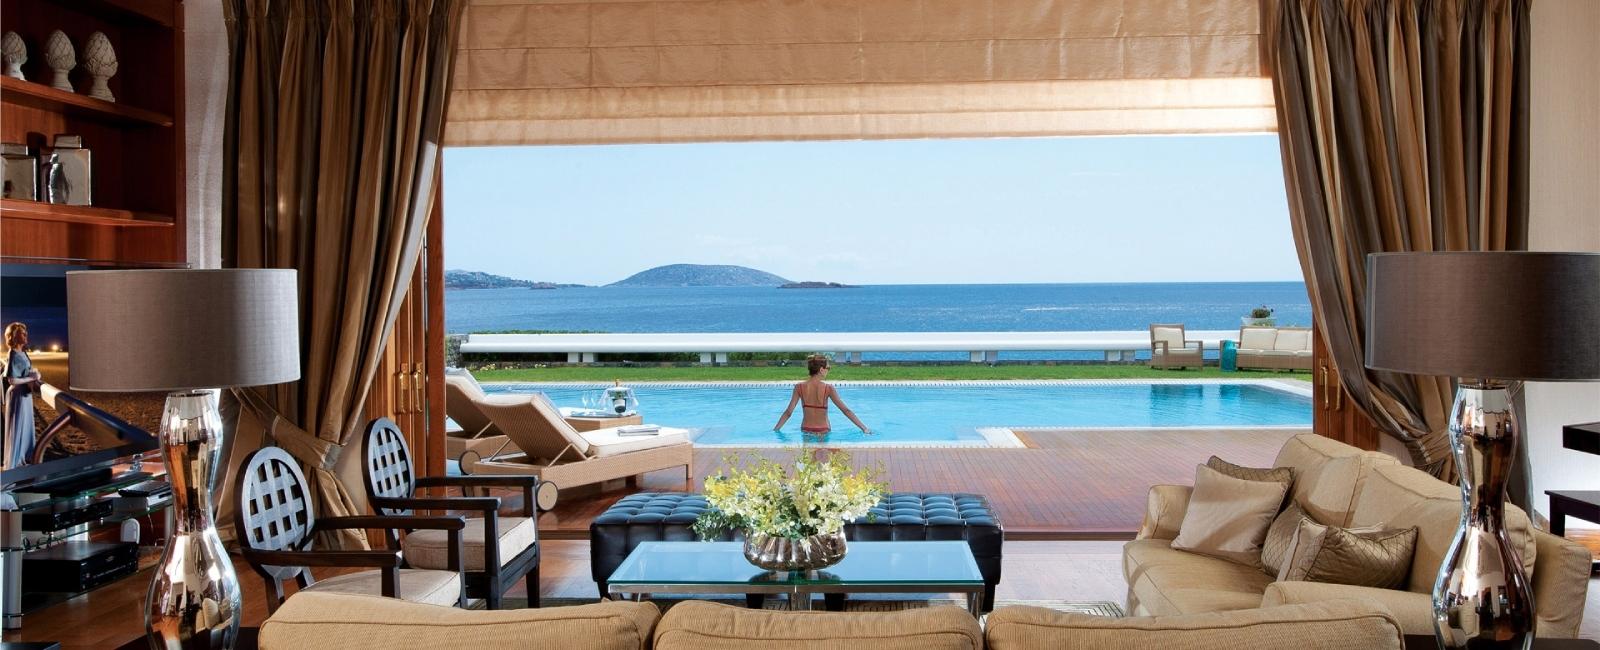 Grand Resort Lagonissi | Athens, Attica, Greece